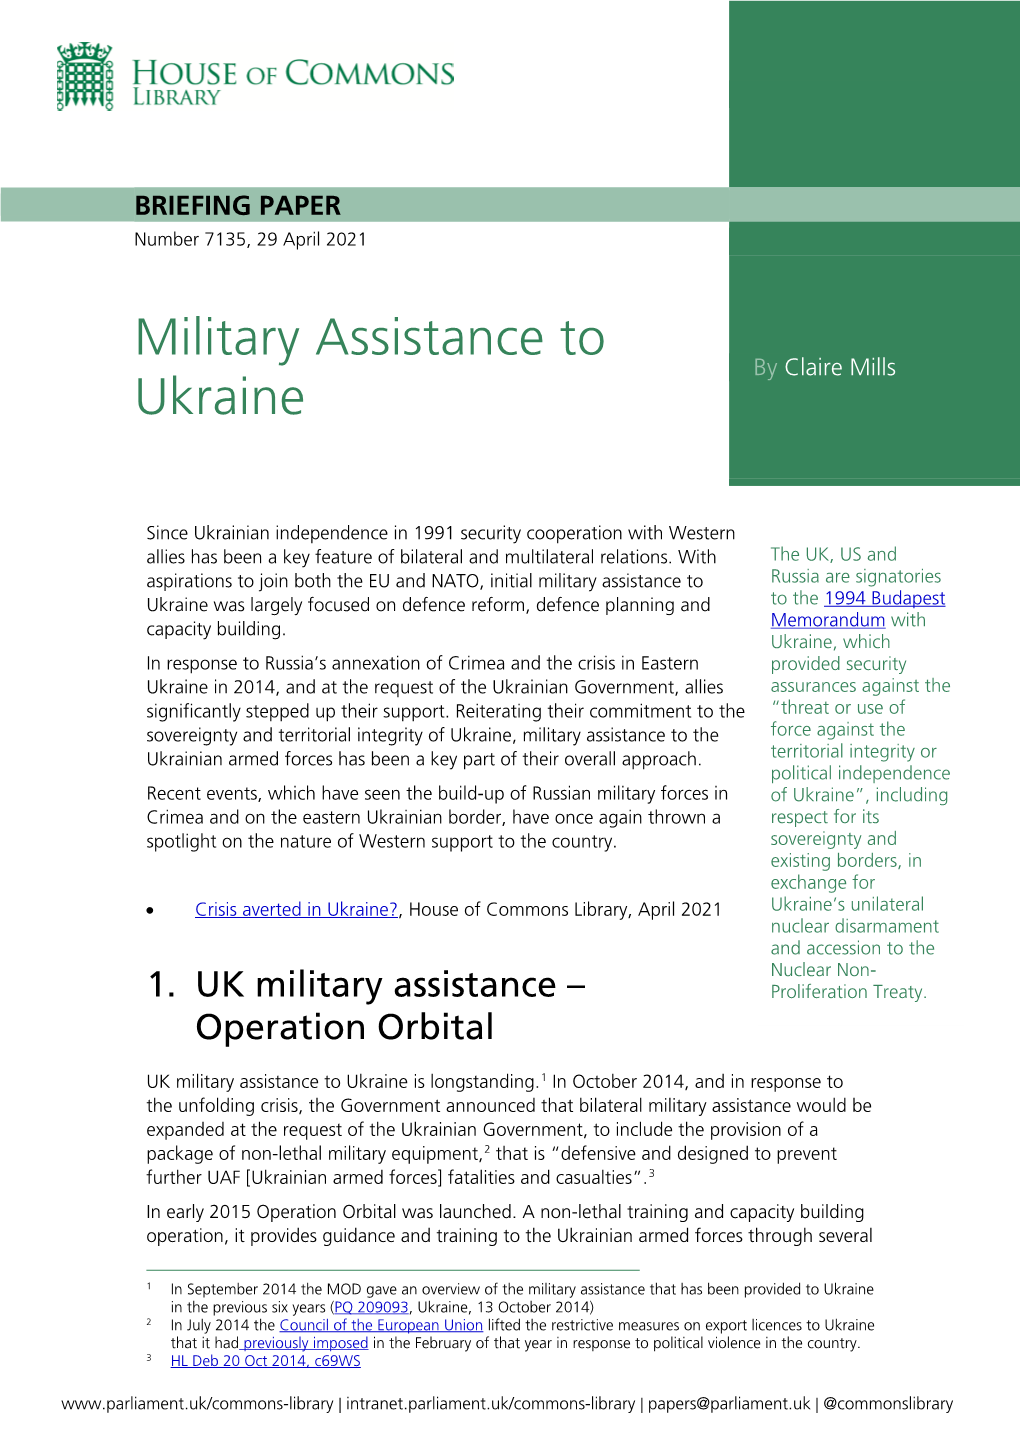 UK Military Assistance to Ukraine